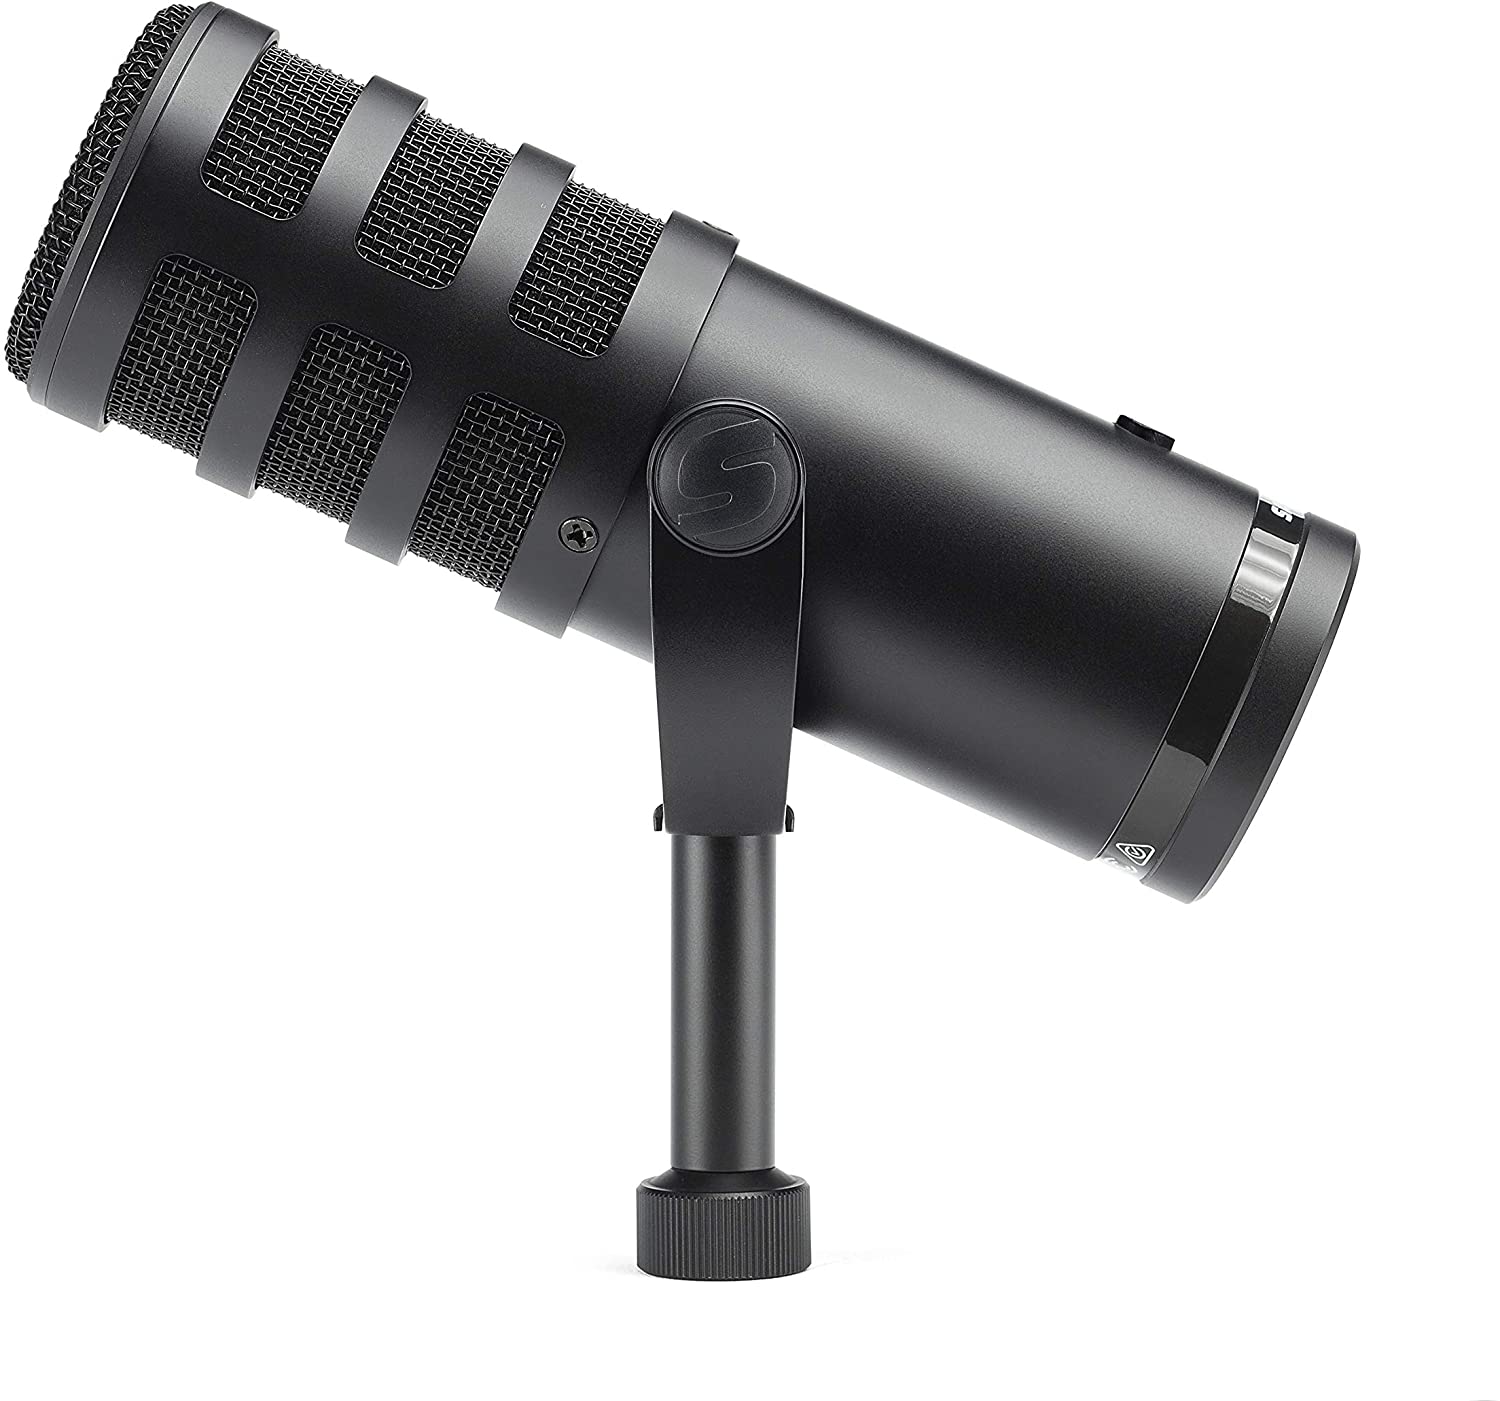 Samson Q9U Broadcast Microphone with SR880 Closed-Back Studio Headphones - Pro-Distributing